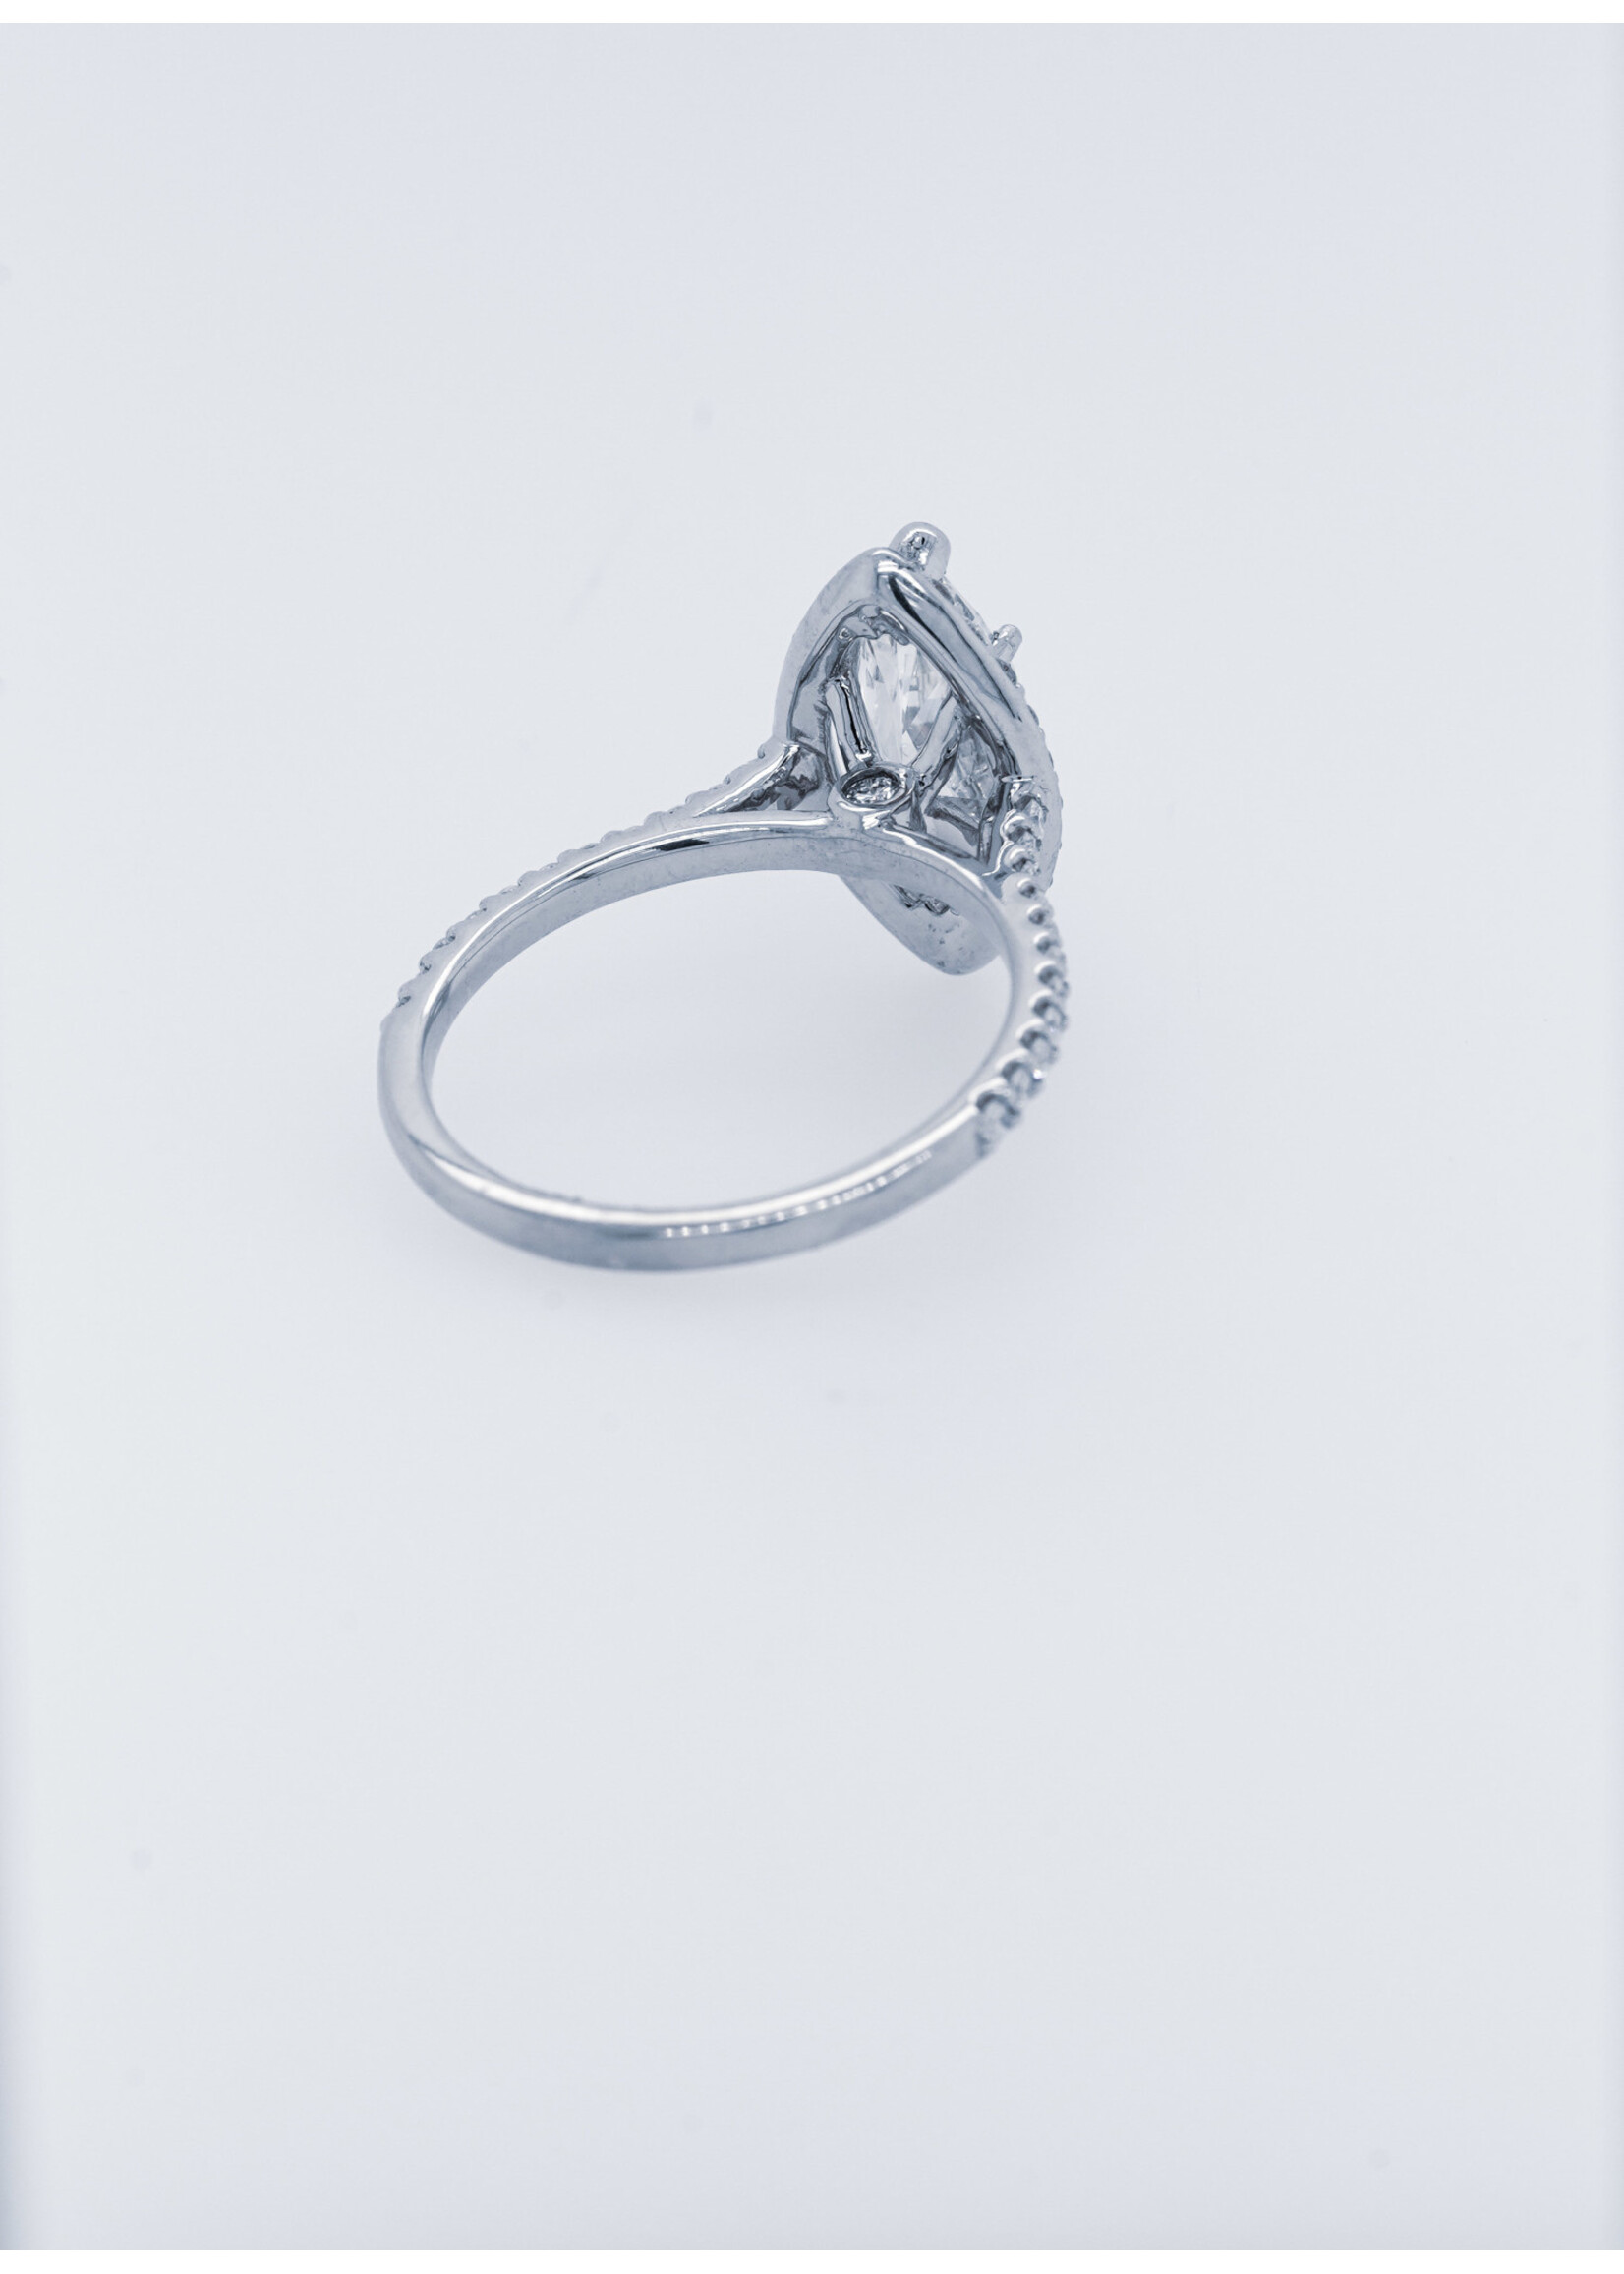 14KW 3.56g 2.43ctw (1.95ctr) E/VS1 GIA Marquise Diamond Halo Engagement Ring (size 7)